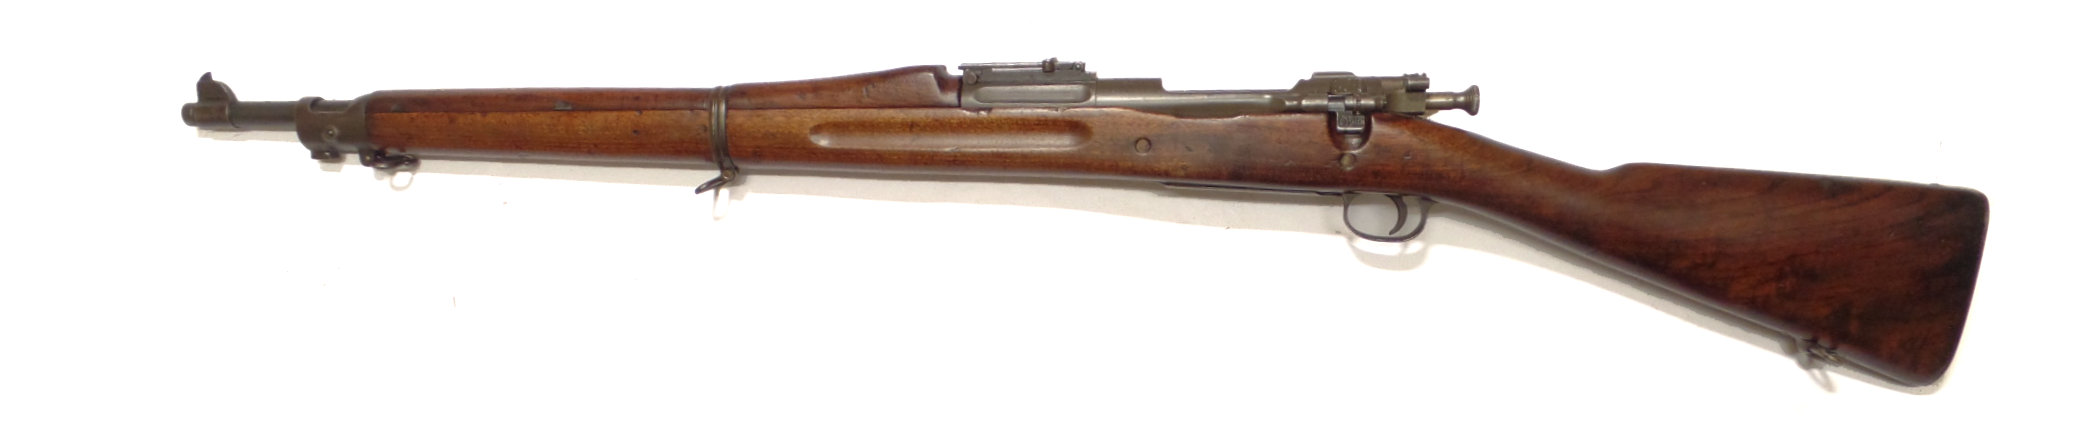 SPRINGFIELD 1903 calibre 30-06